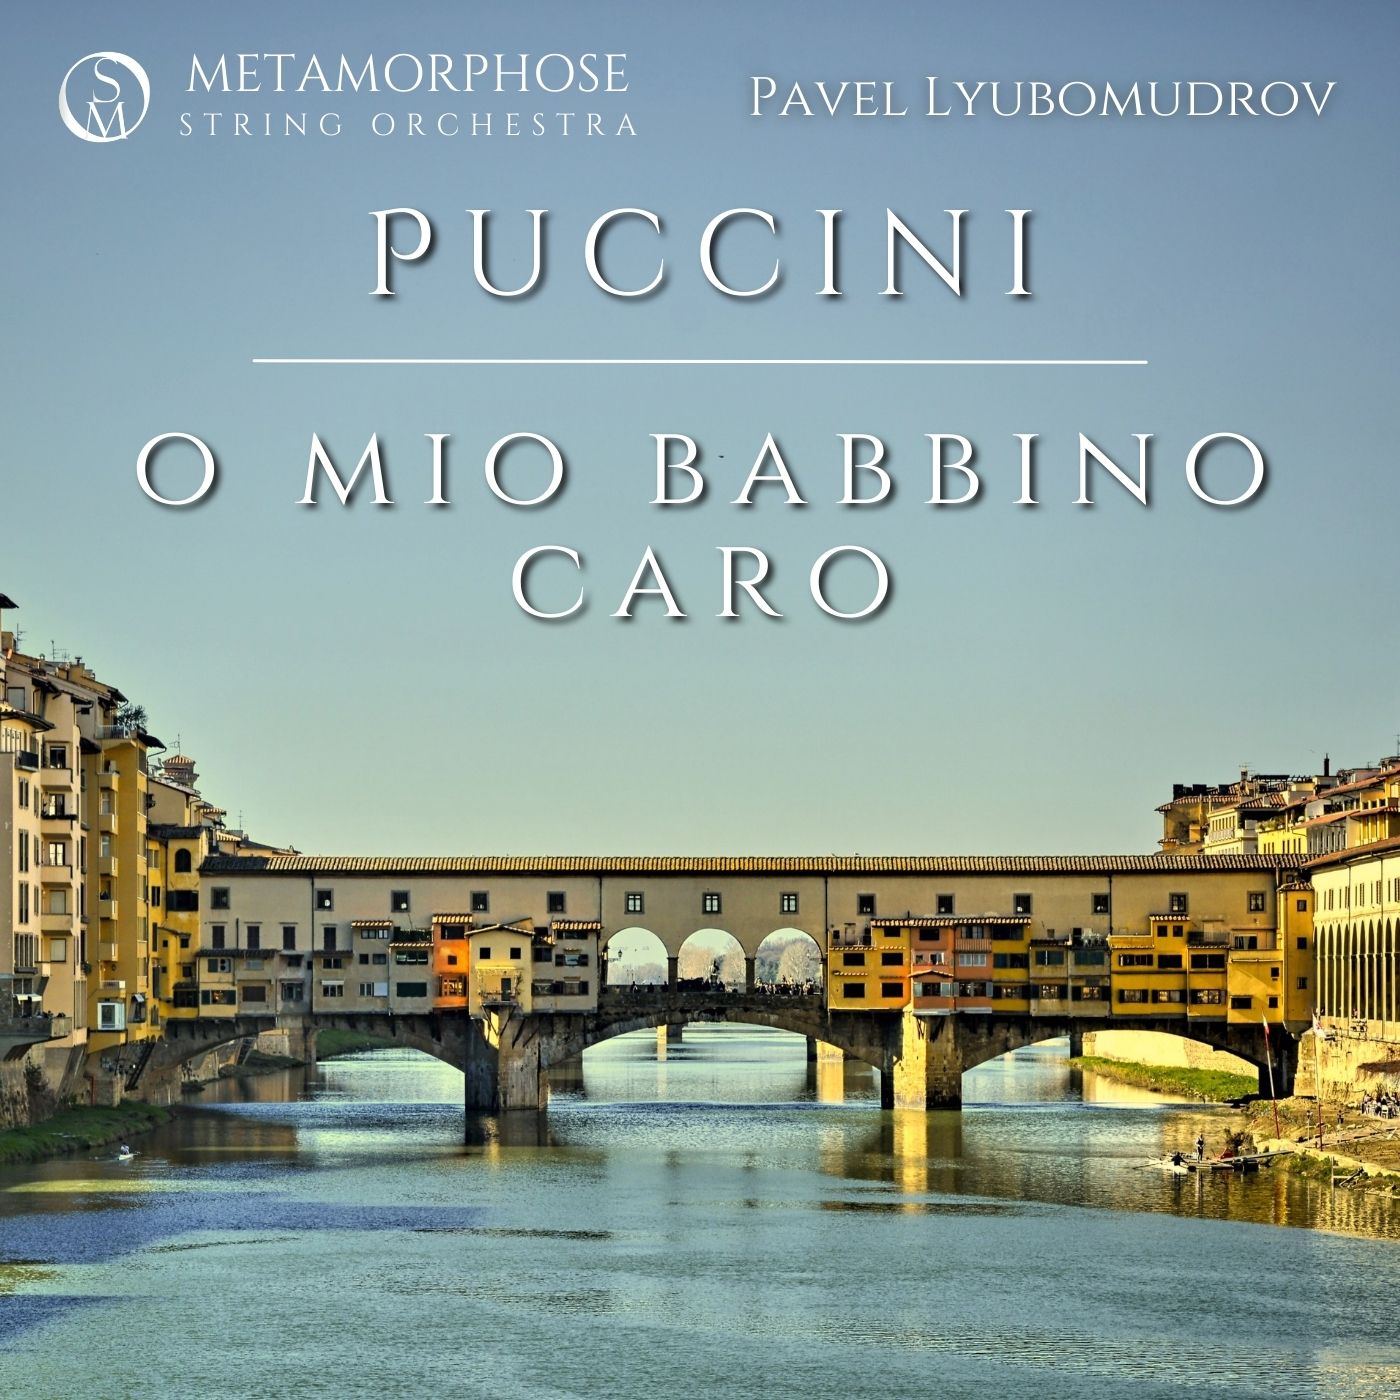 Gianni Schicchi, SC 88: “O Mio Babbino Caro” (Arr. for String Orchestra)